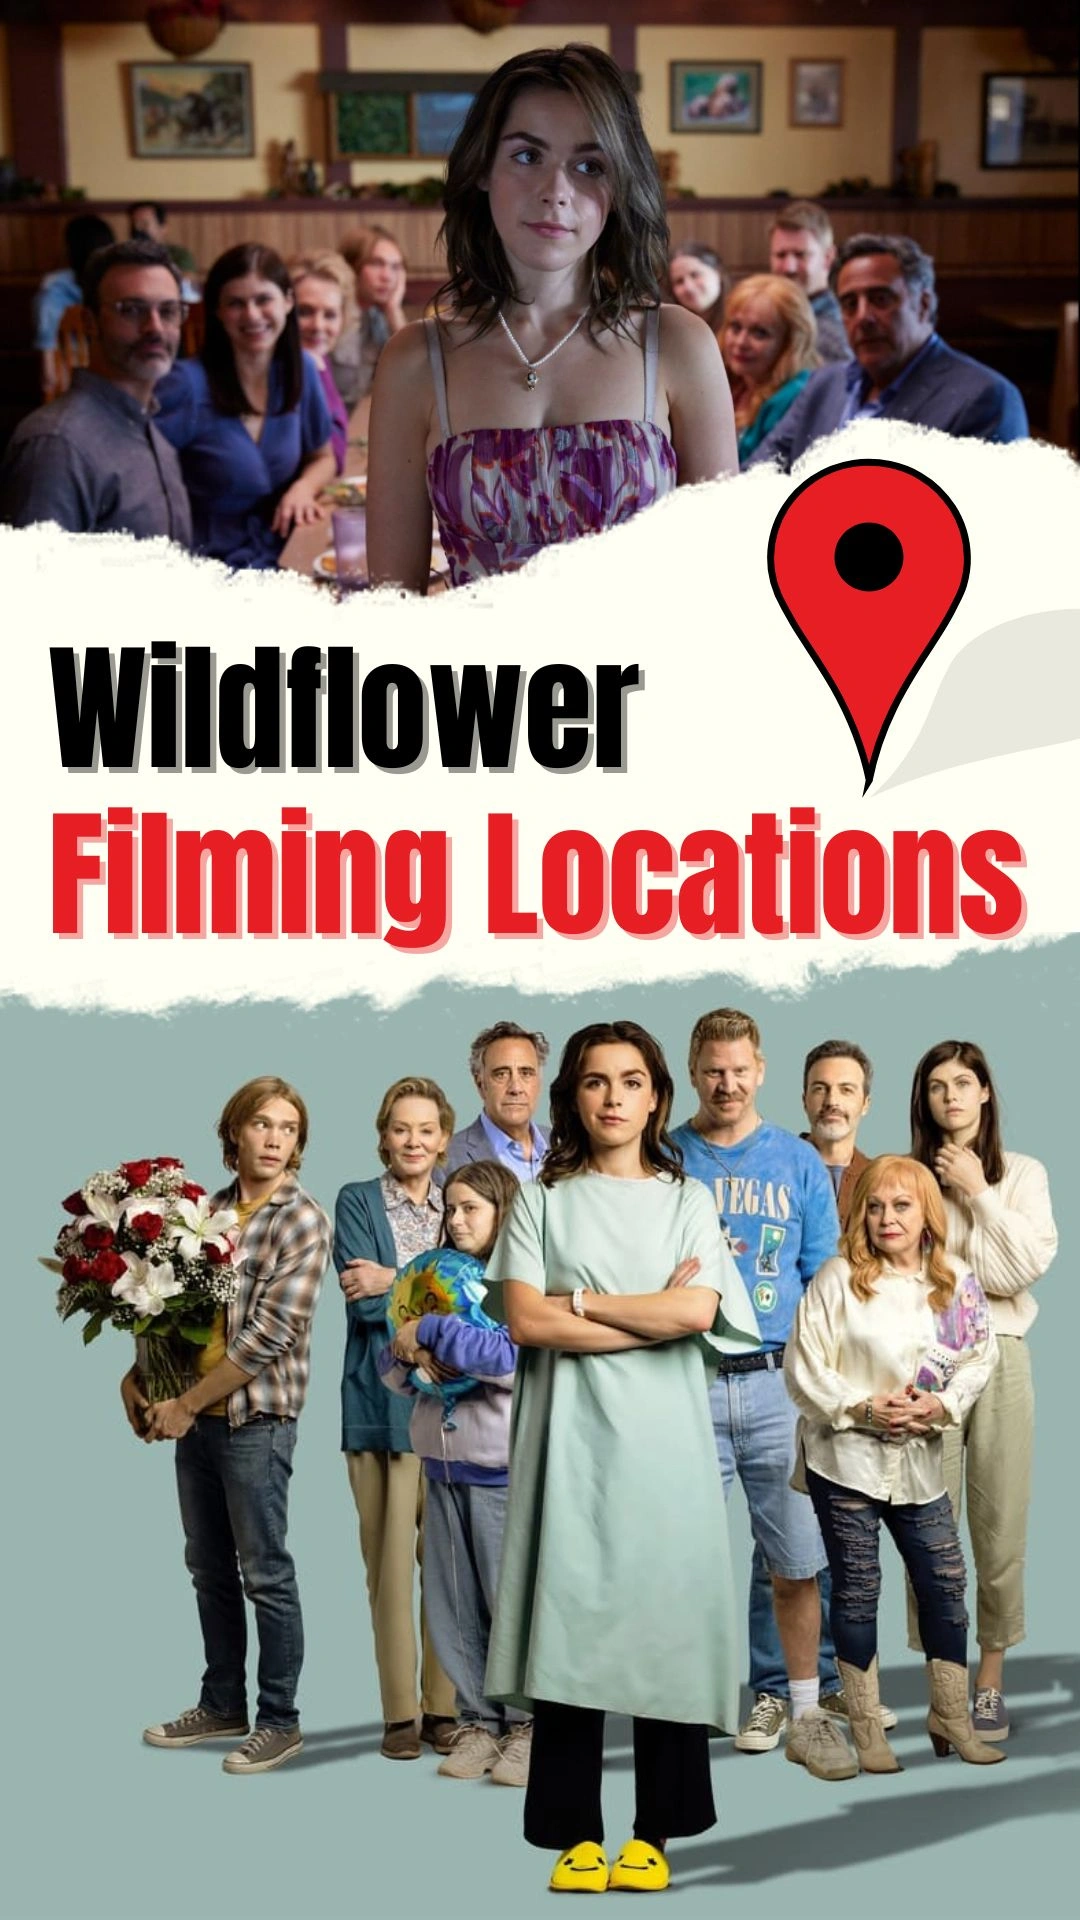 Wildflower Filming Locations